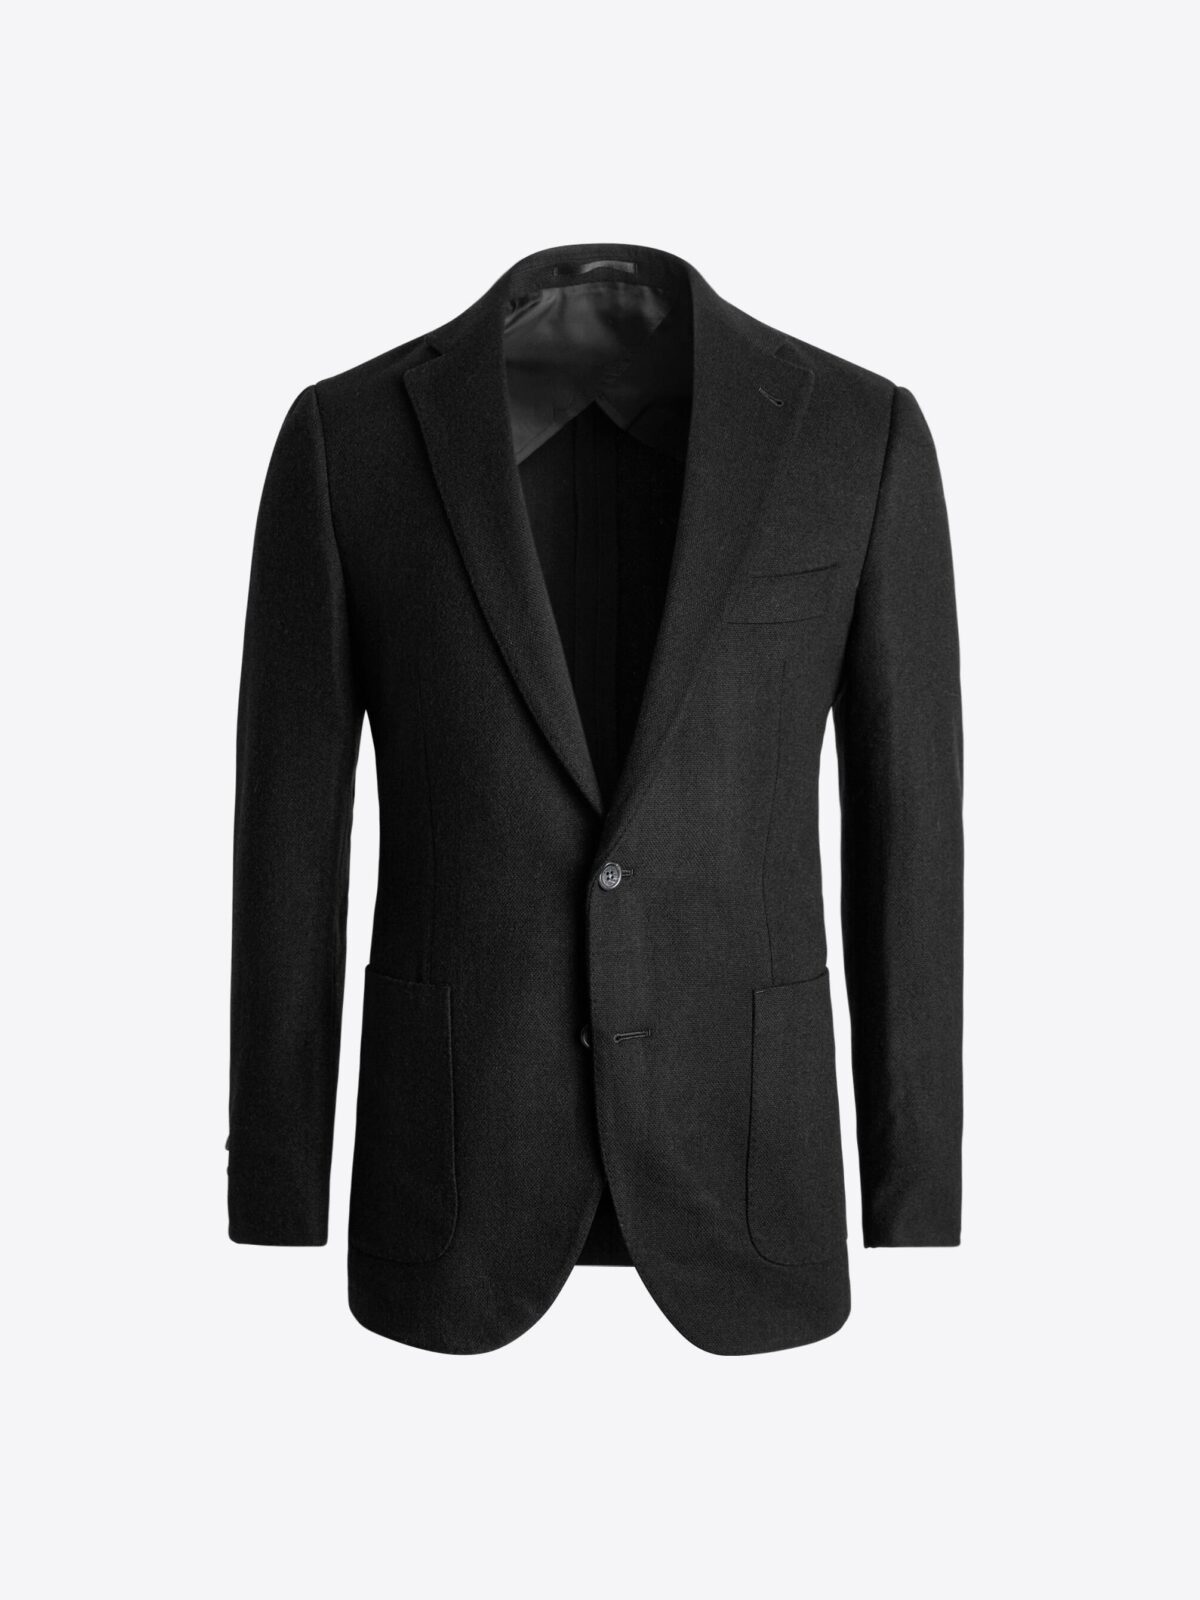 Black Cropped Jacket With Monogram Trim - Ready to Wear